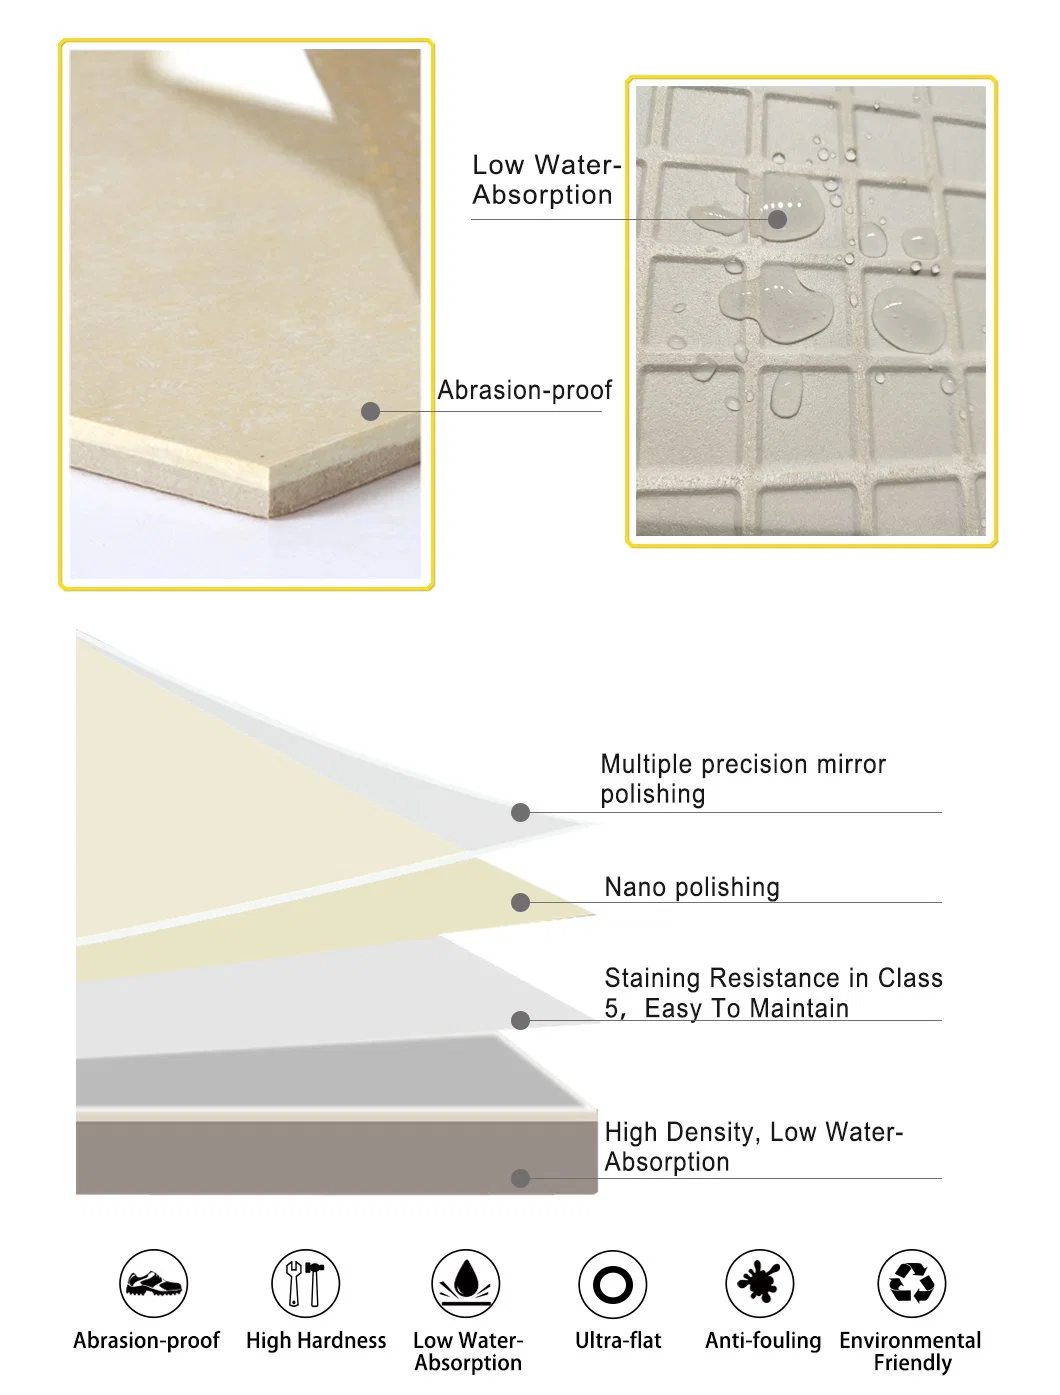 Natural Stone Series Acid-Resistant Polished Porcelain Tiles 24X24 36X36 Inches Floor Tiles